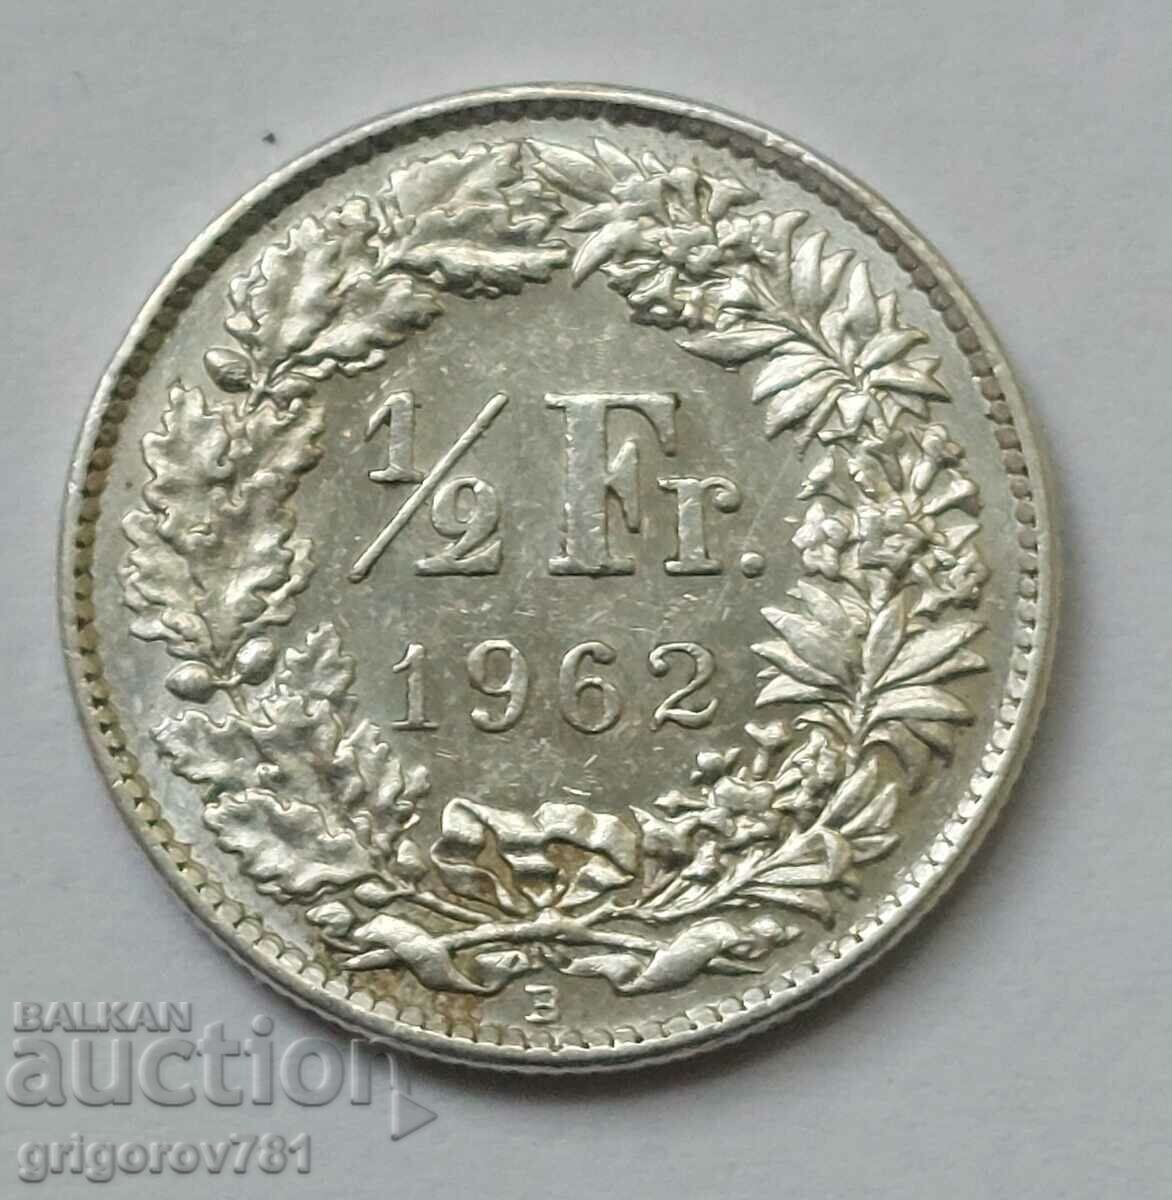 1/2 Franc Silver Switzerland 1962 B - Silver Coin #90